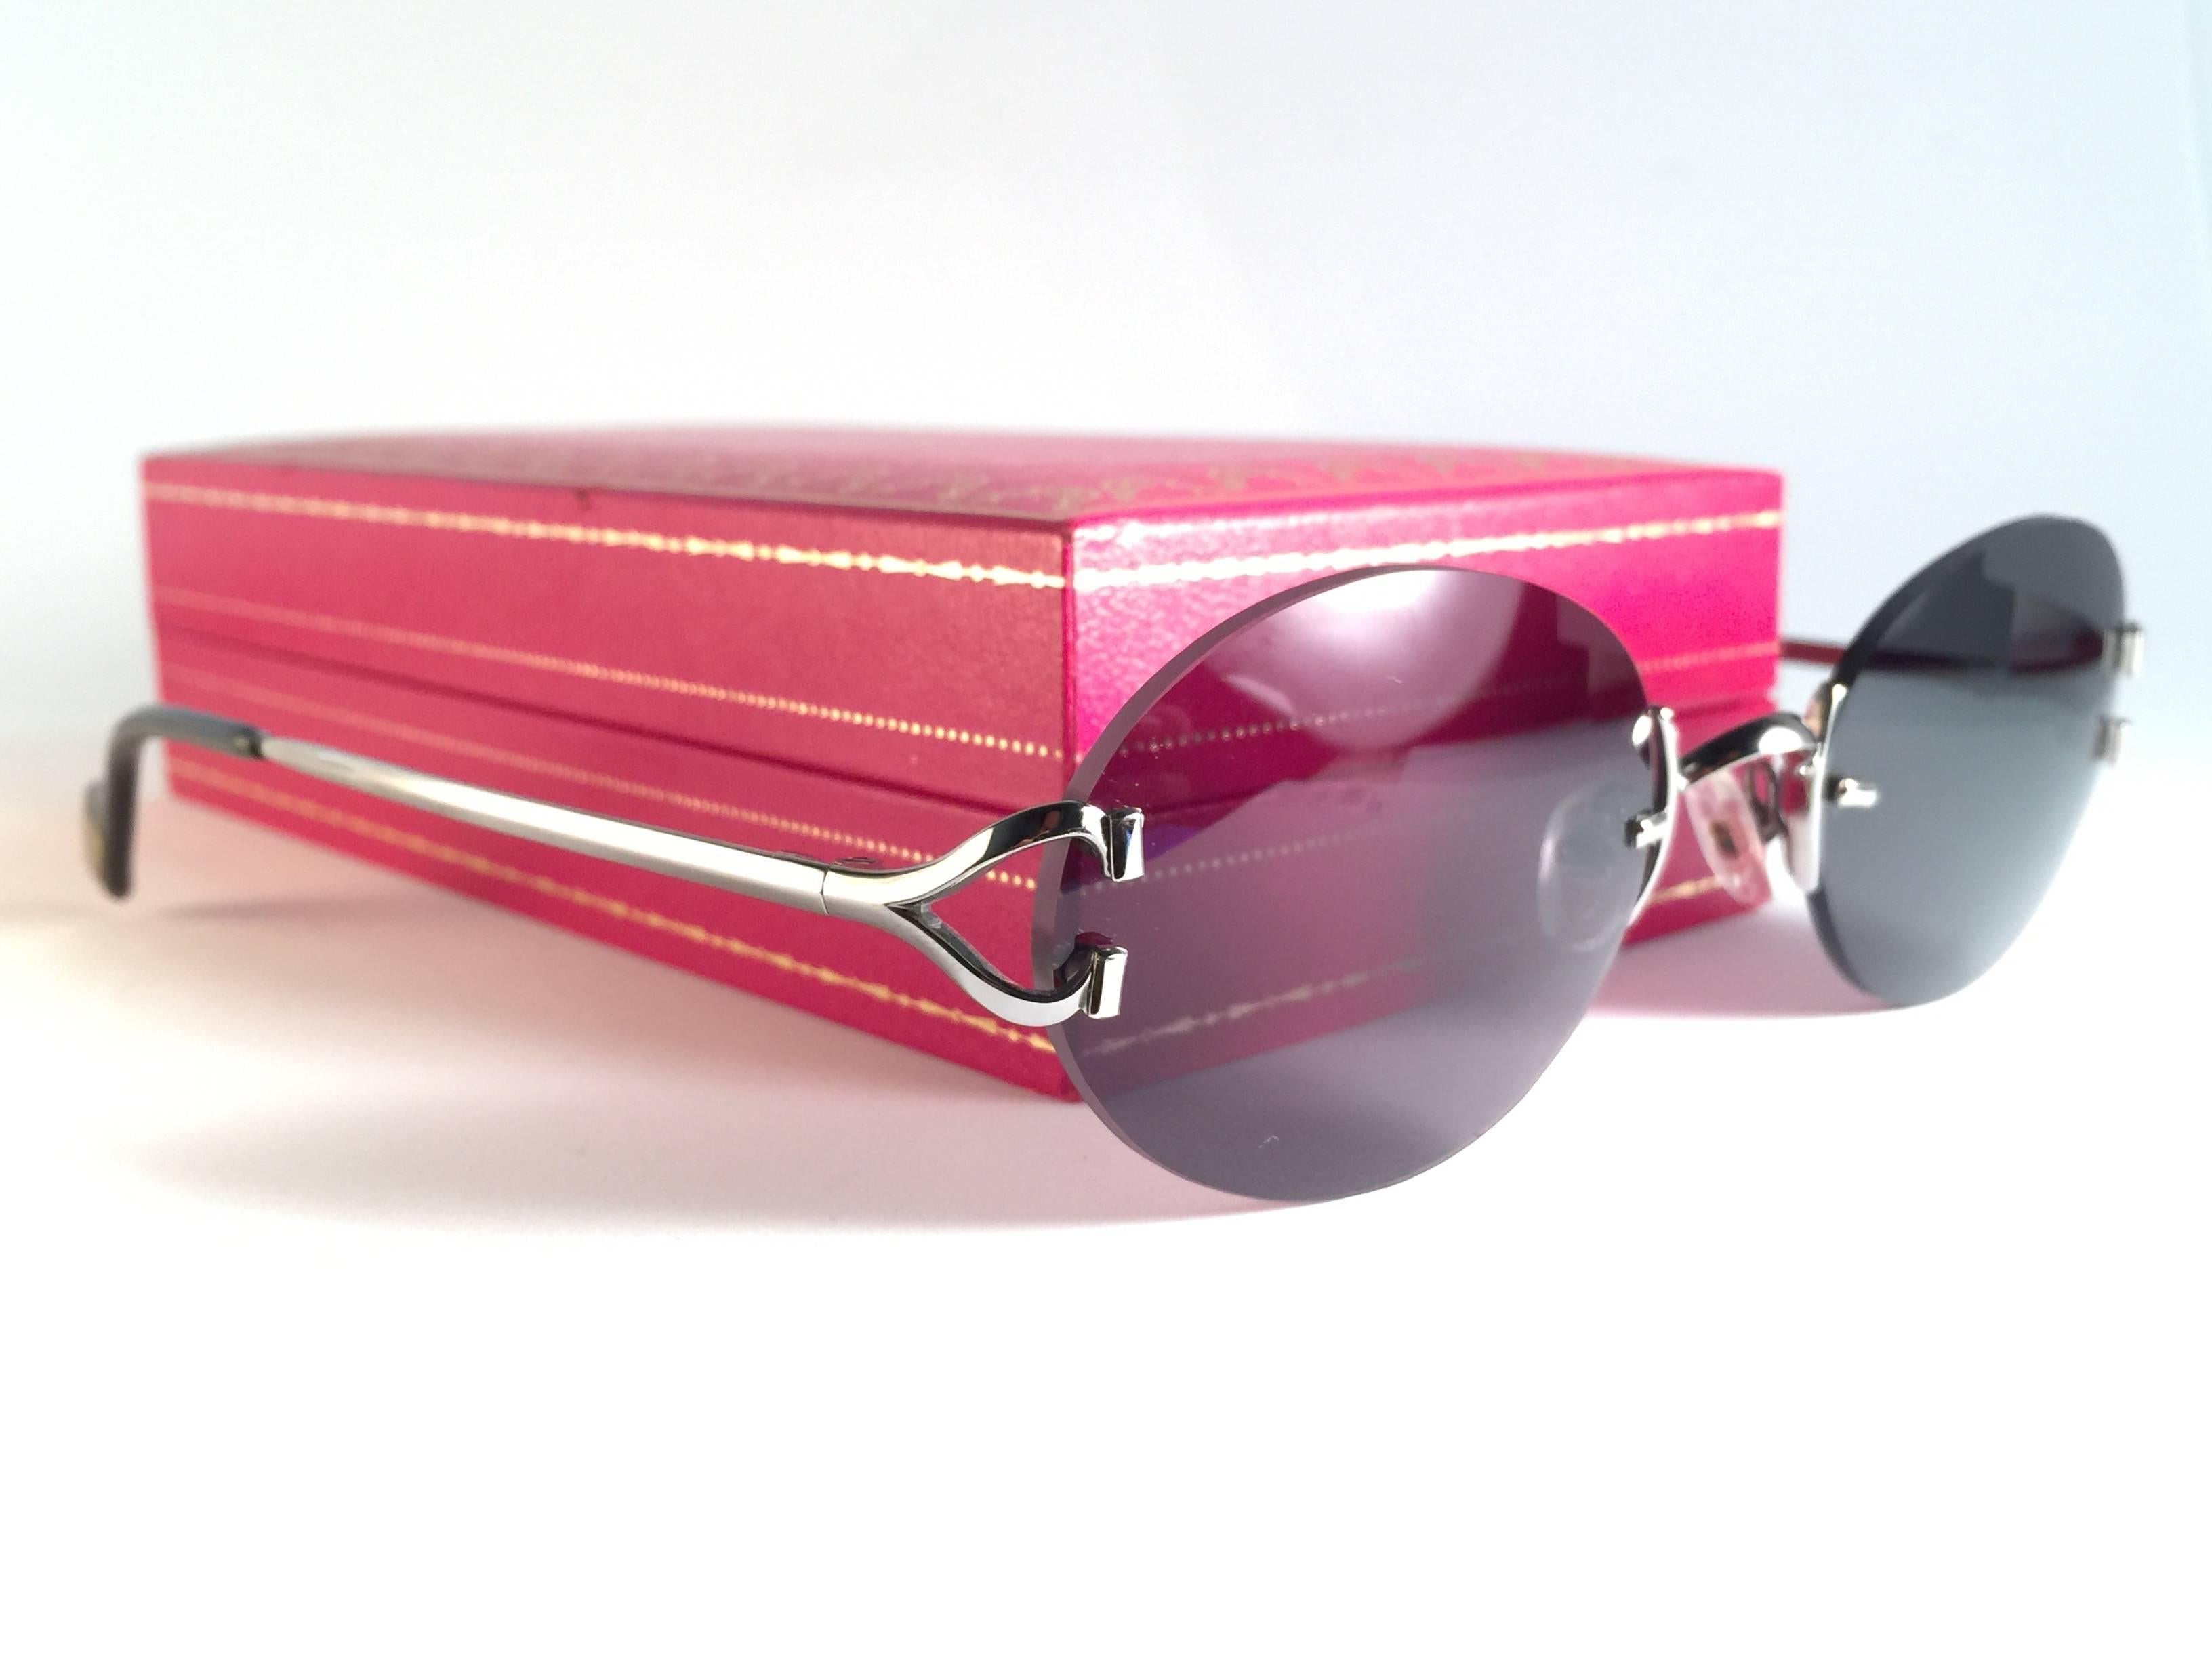 cartier sunglasses t8200